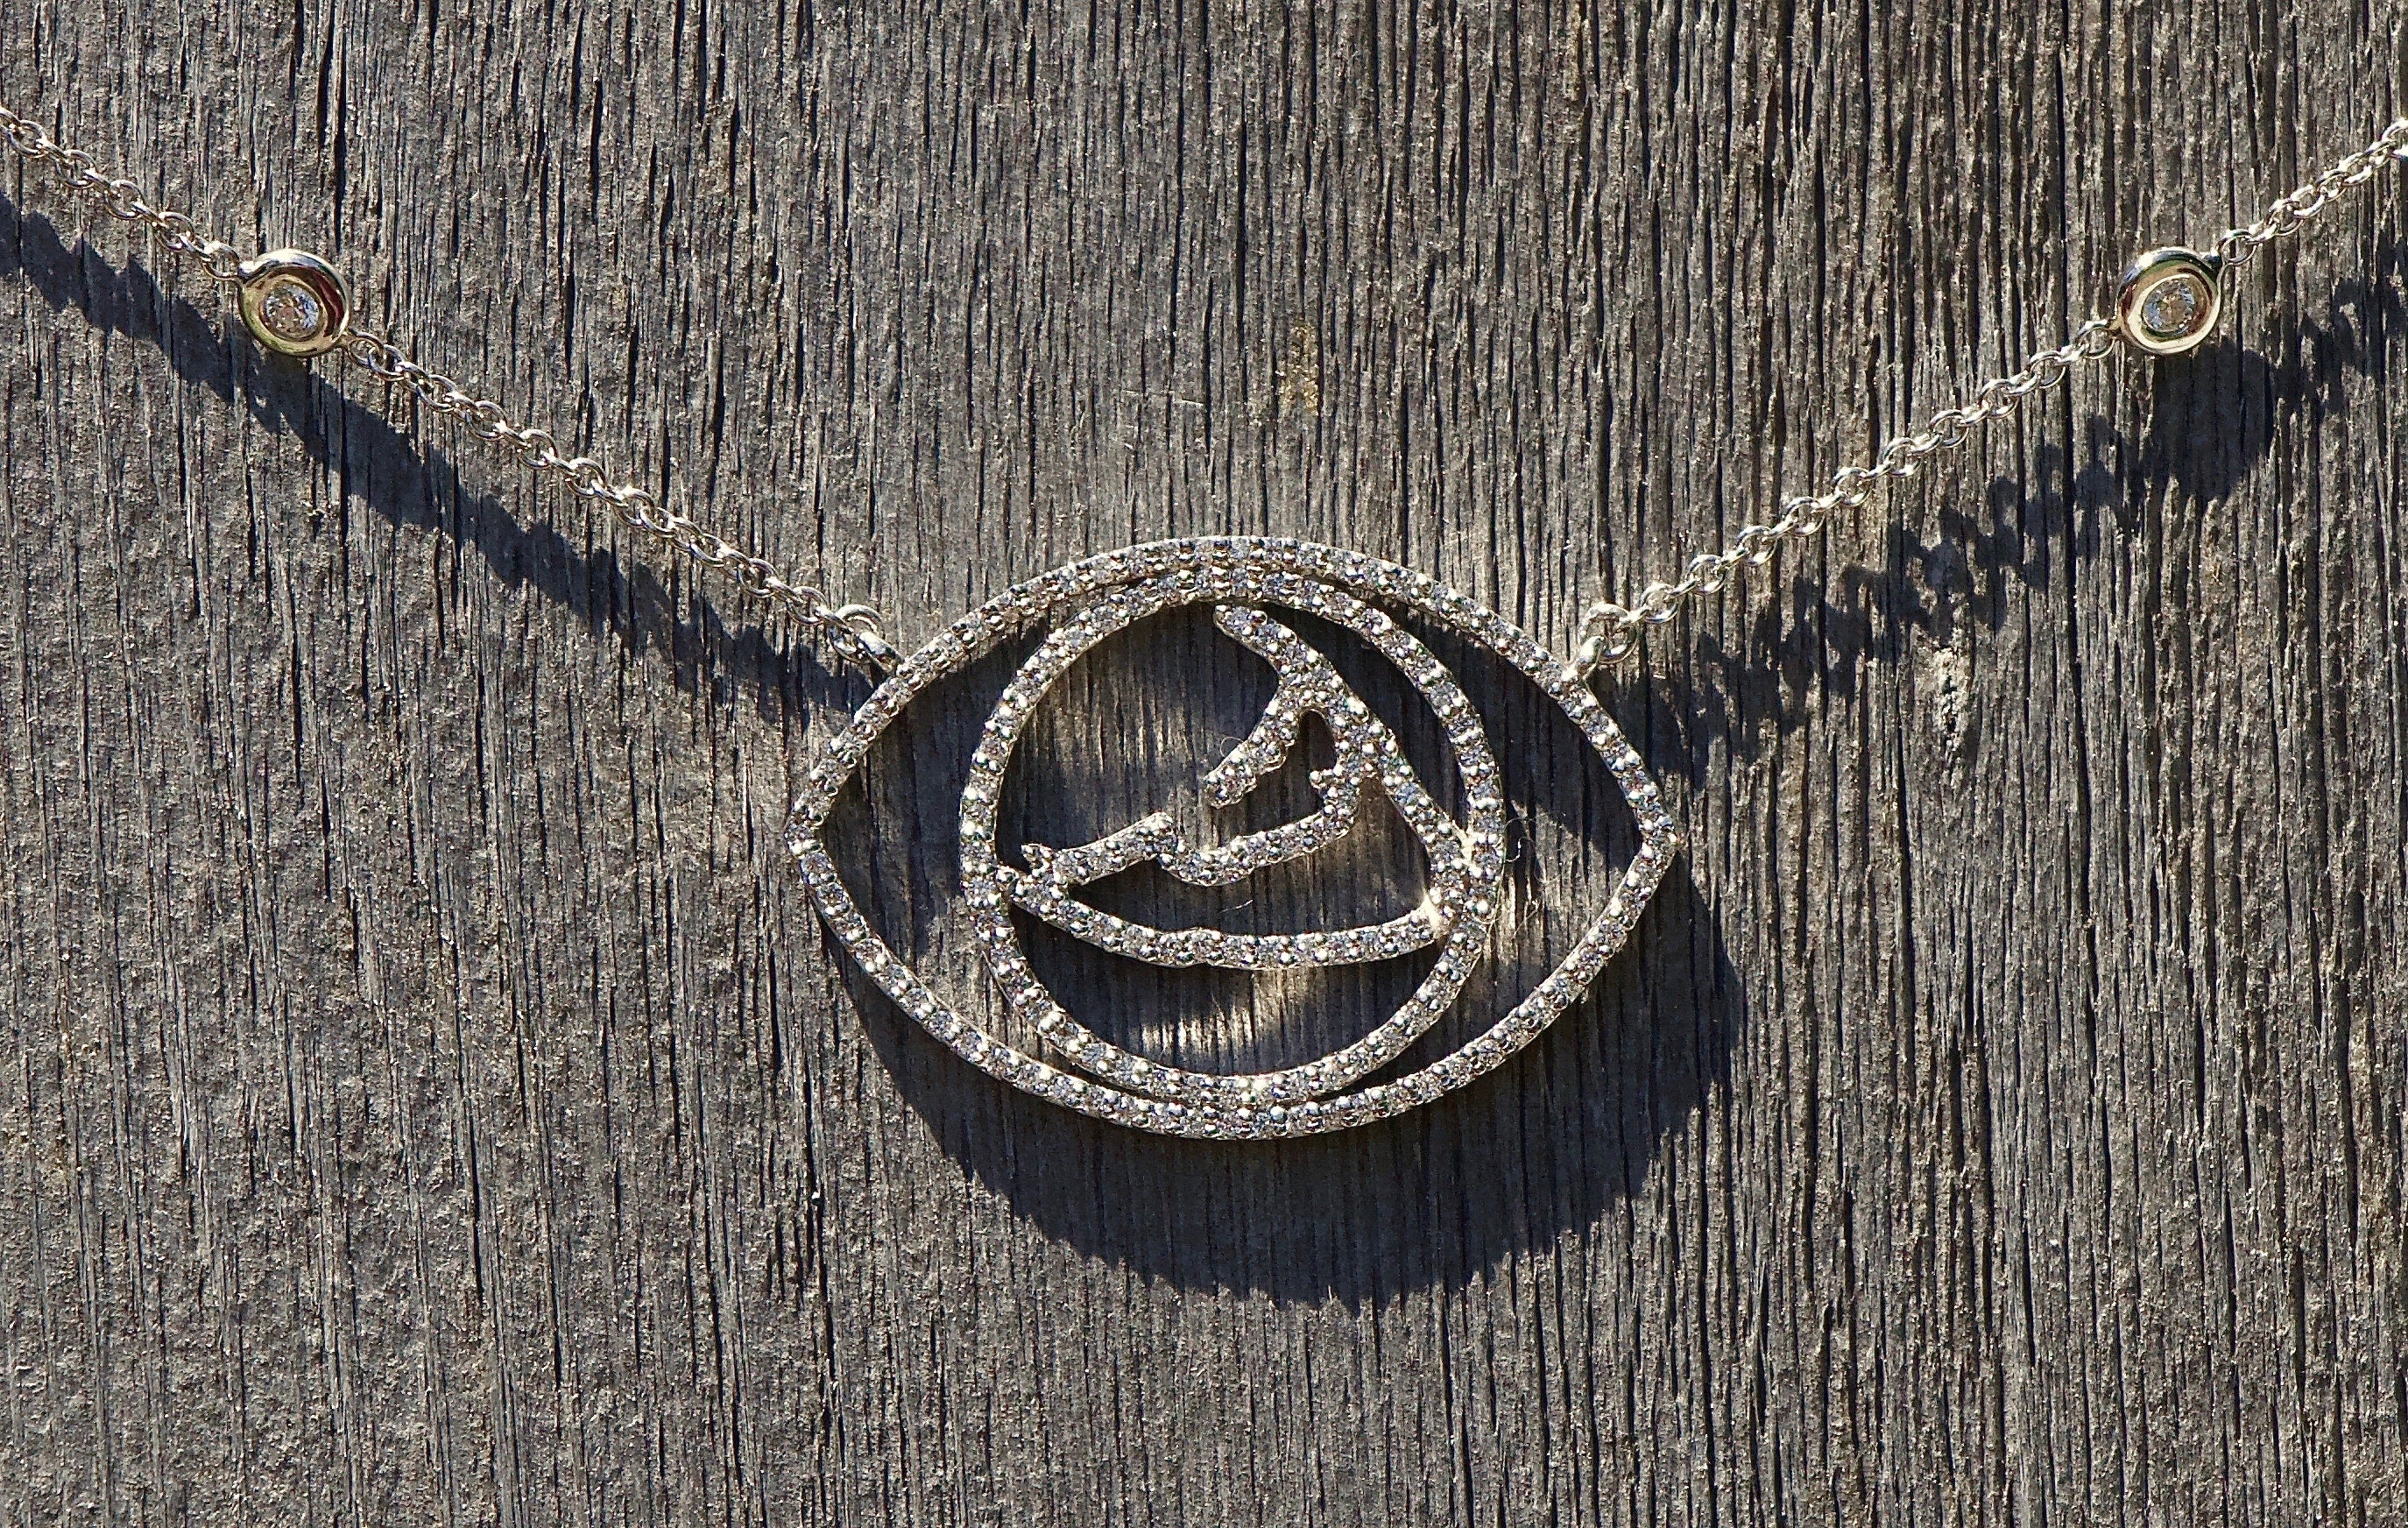 Diamond Nantucket Evil Eye® With Diamond Chain Talisman Necklace